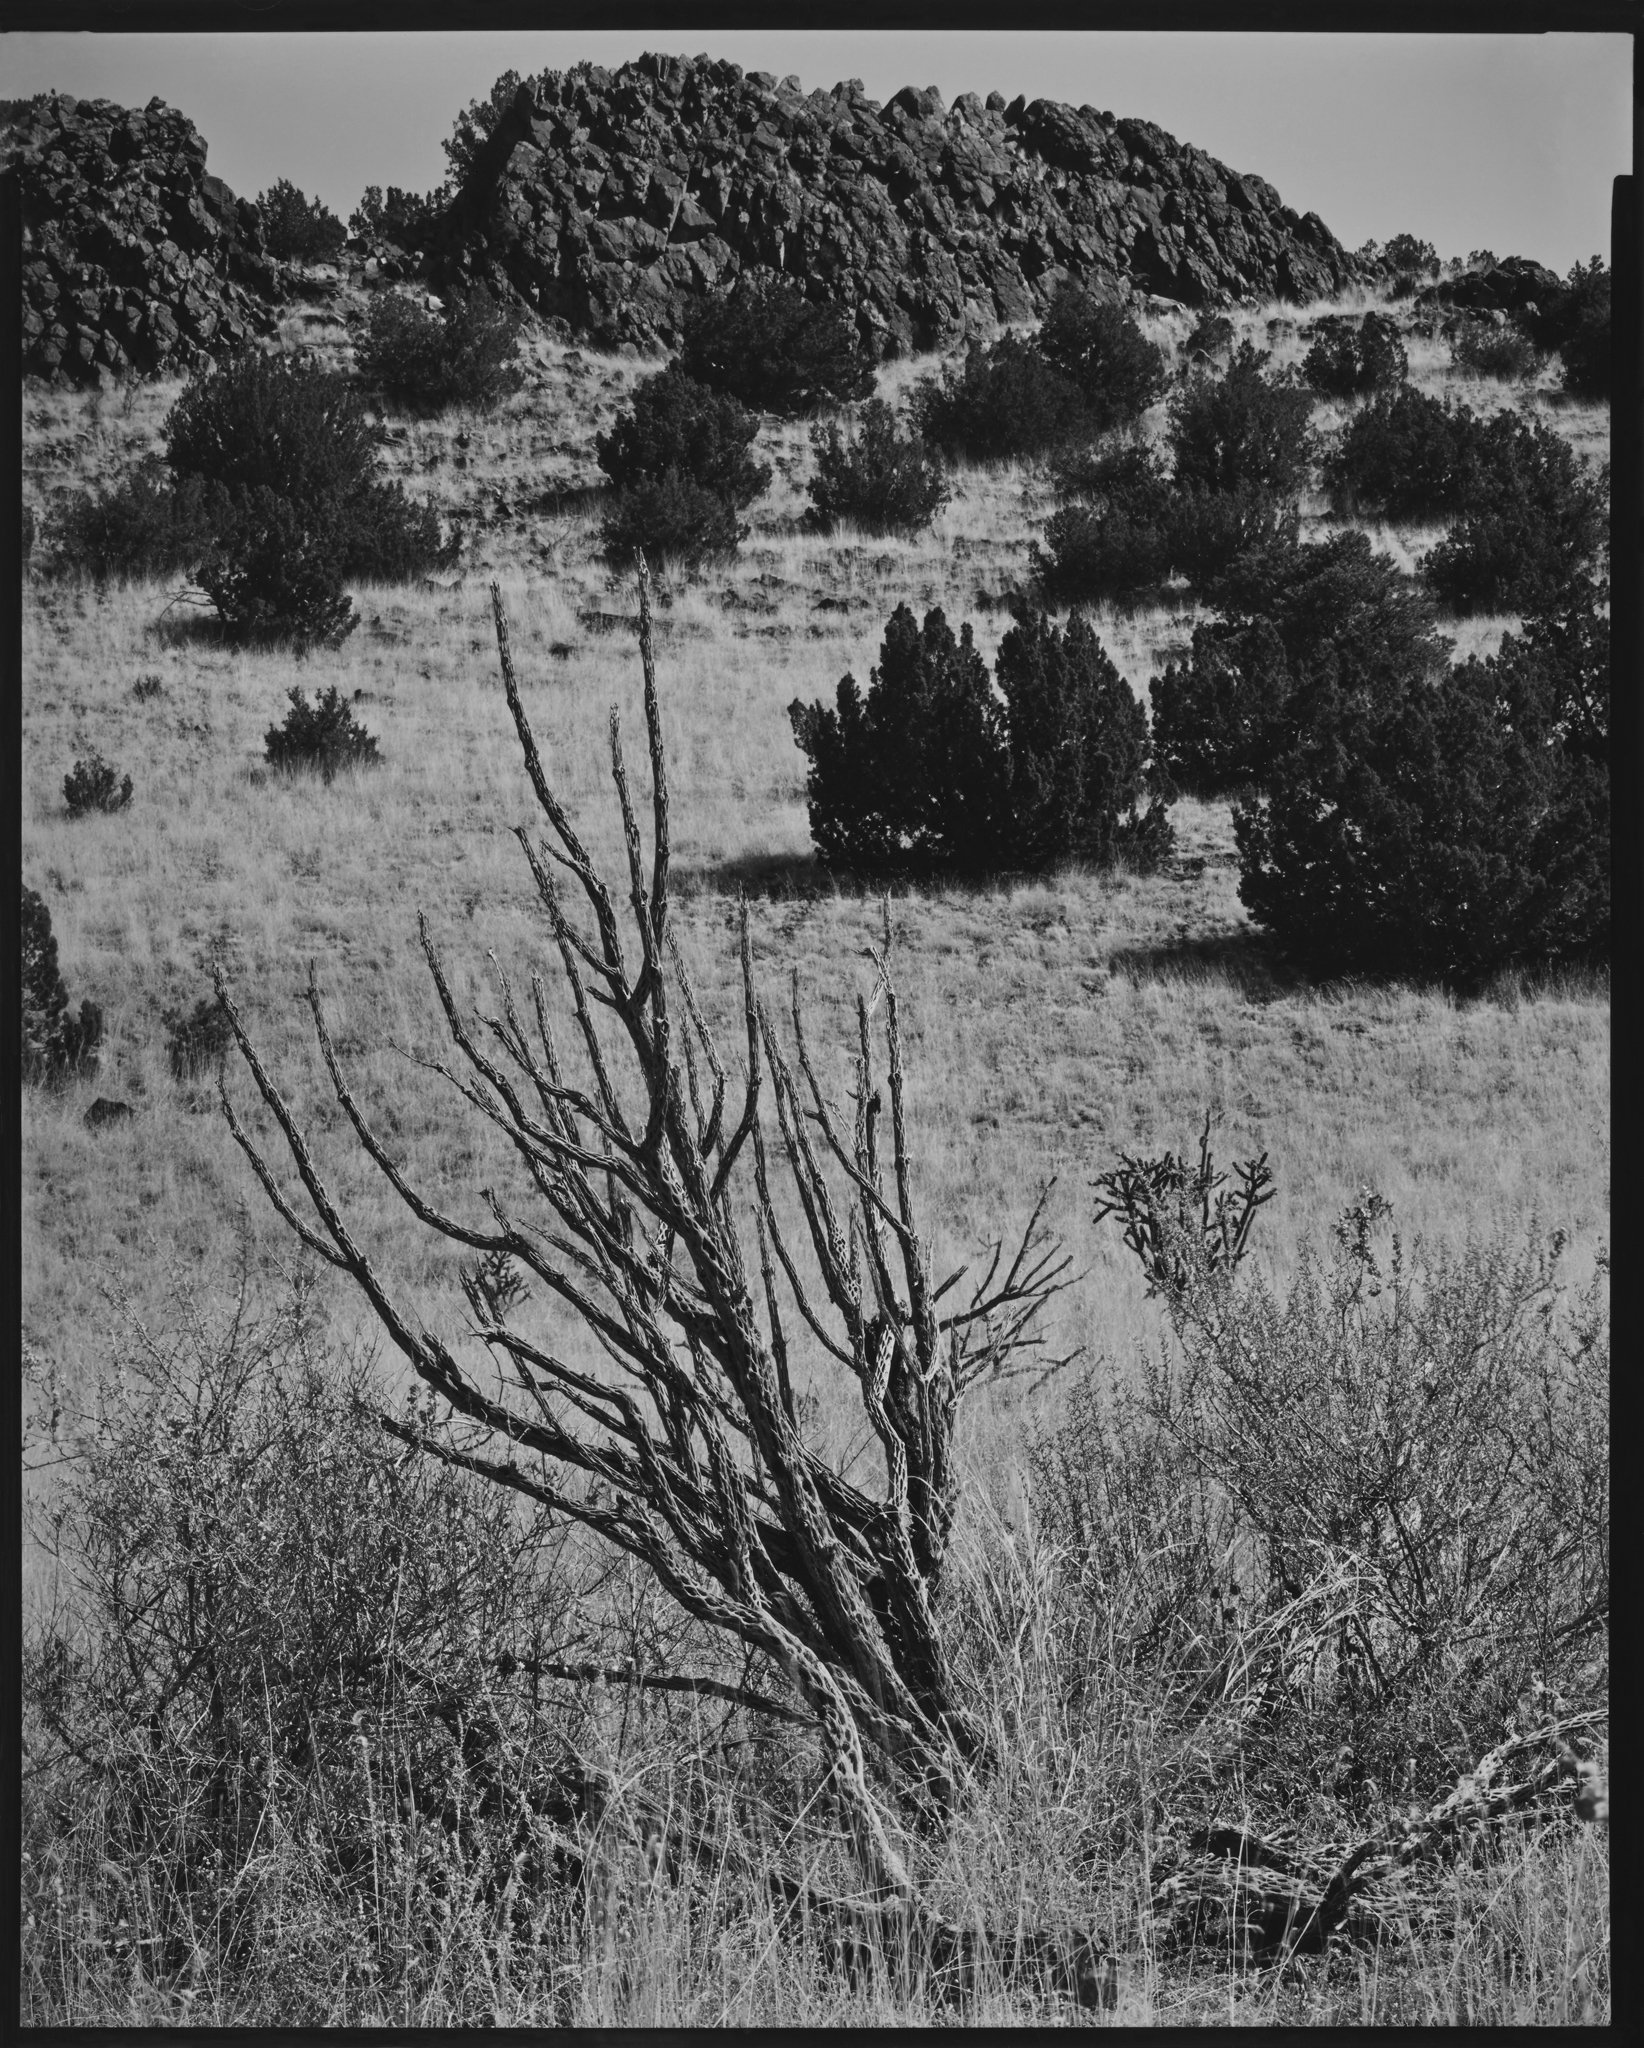 Cholla Portfolio_Cholla #46_Cholla Skeleton in Landscape, Galisteo, New Mexico_2015 © Nick Merrick.jpg